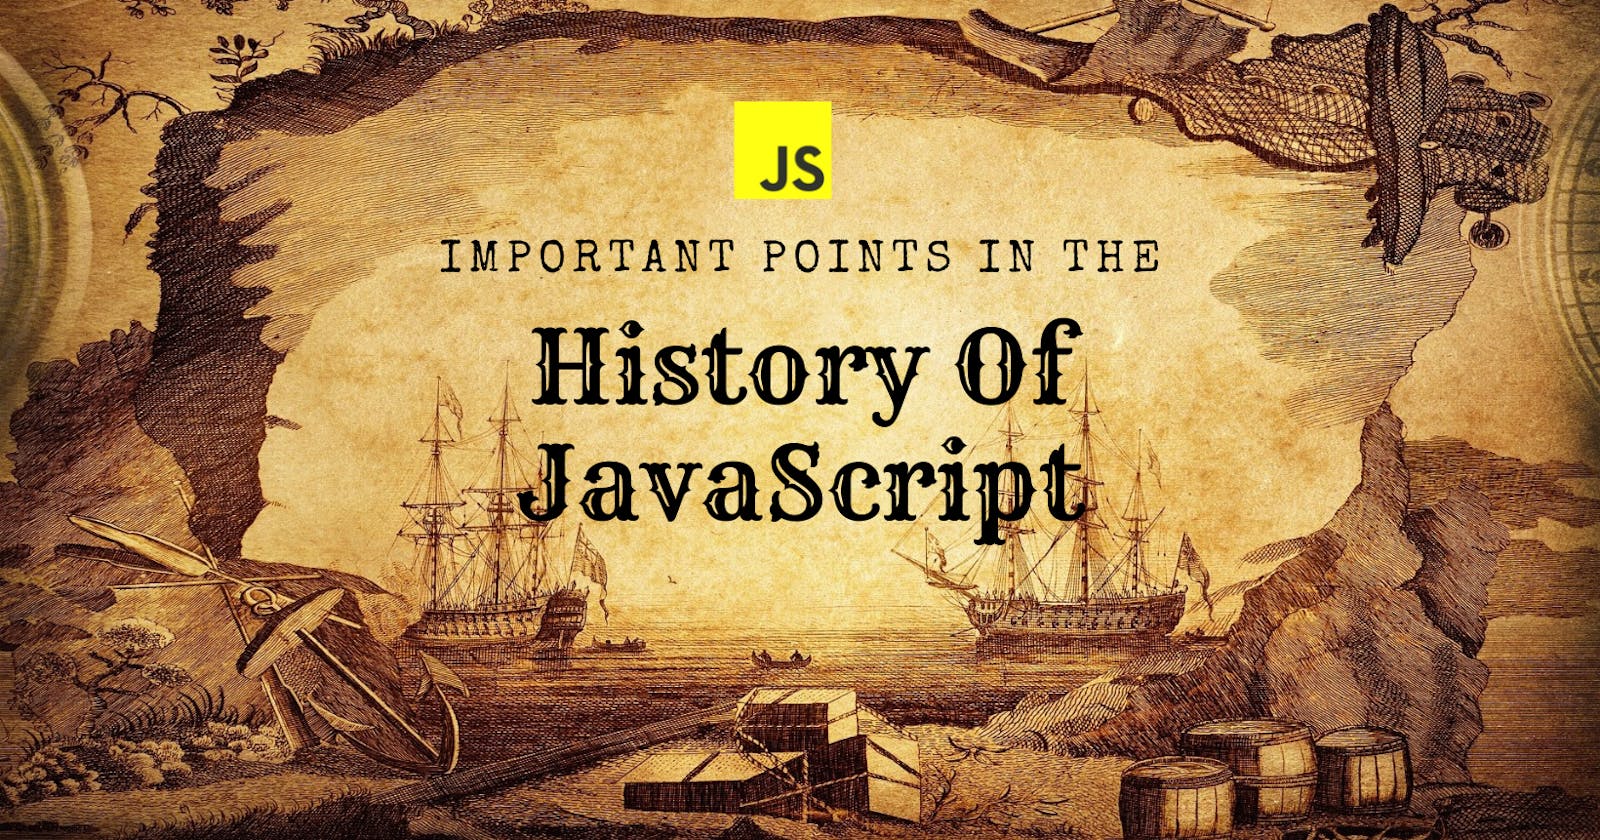 The amazing history of JavaScript.